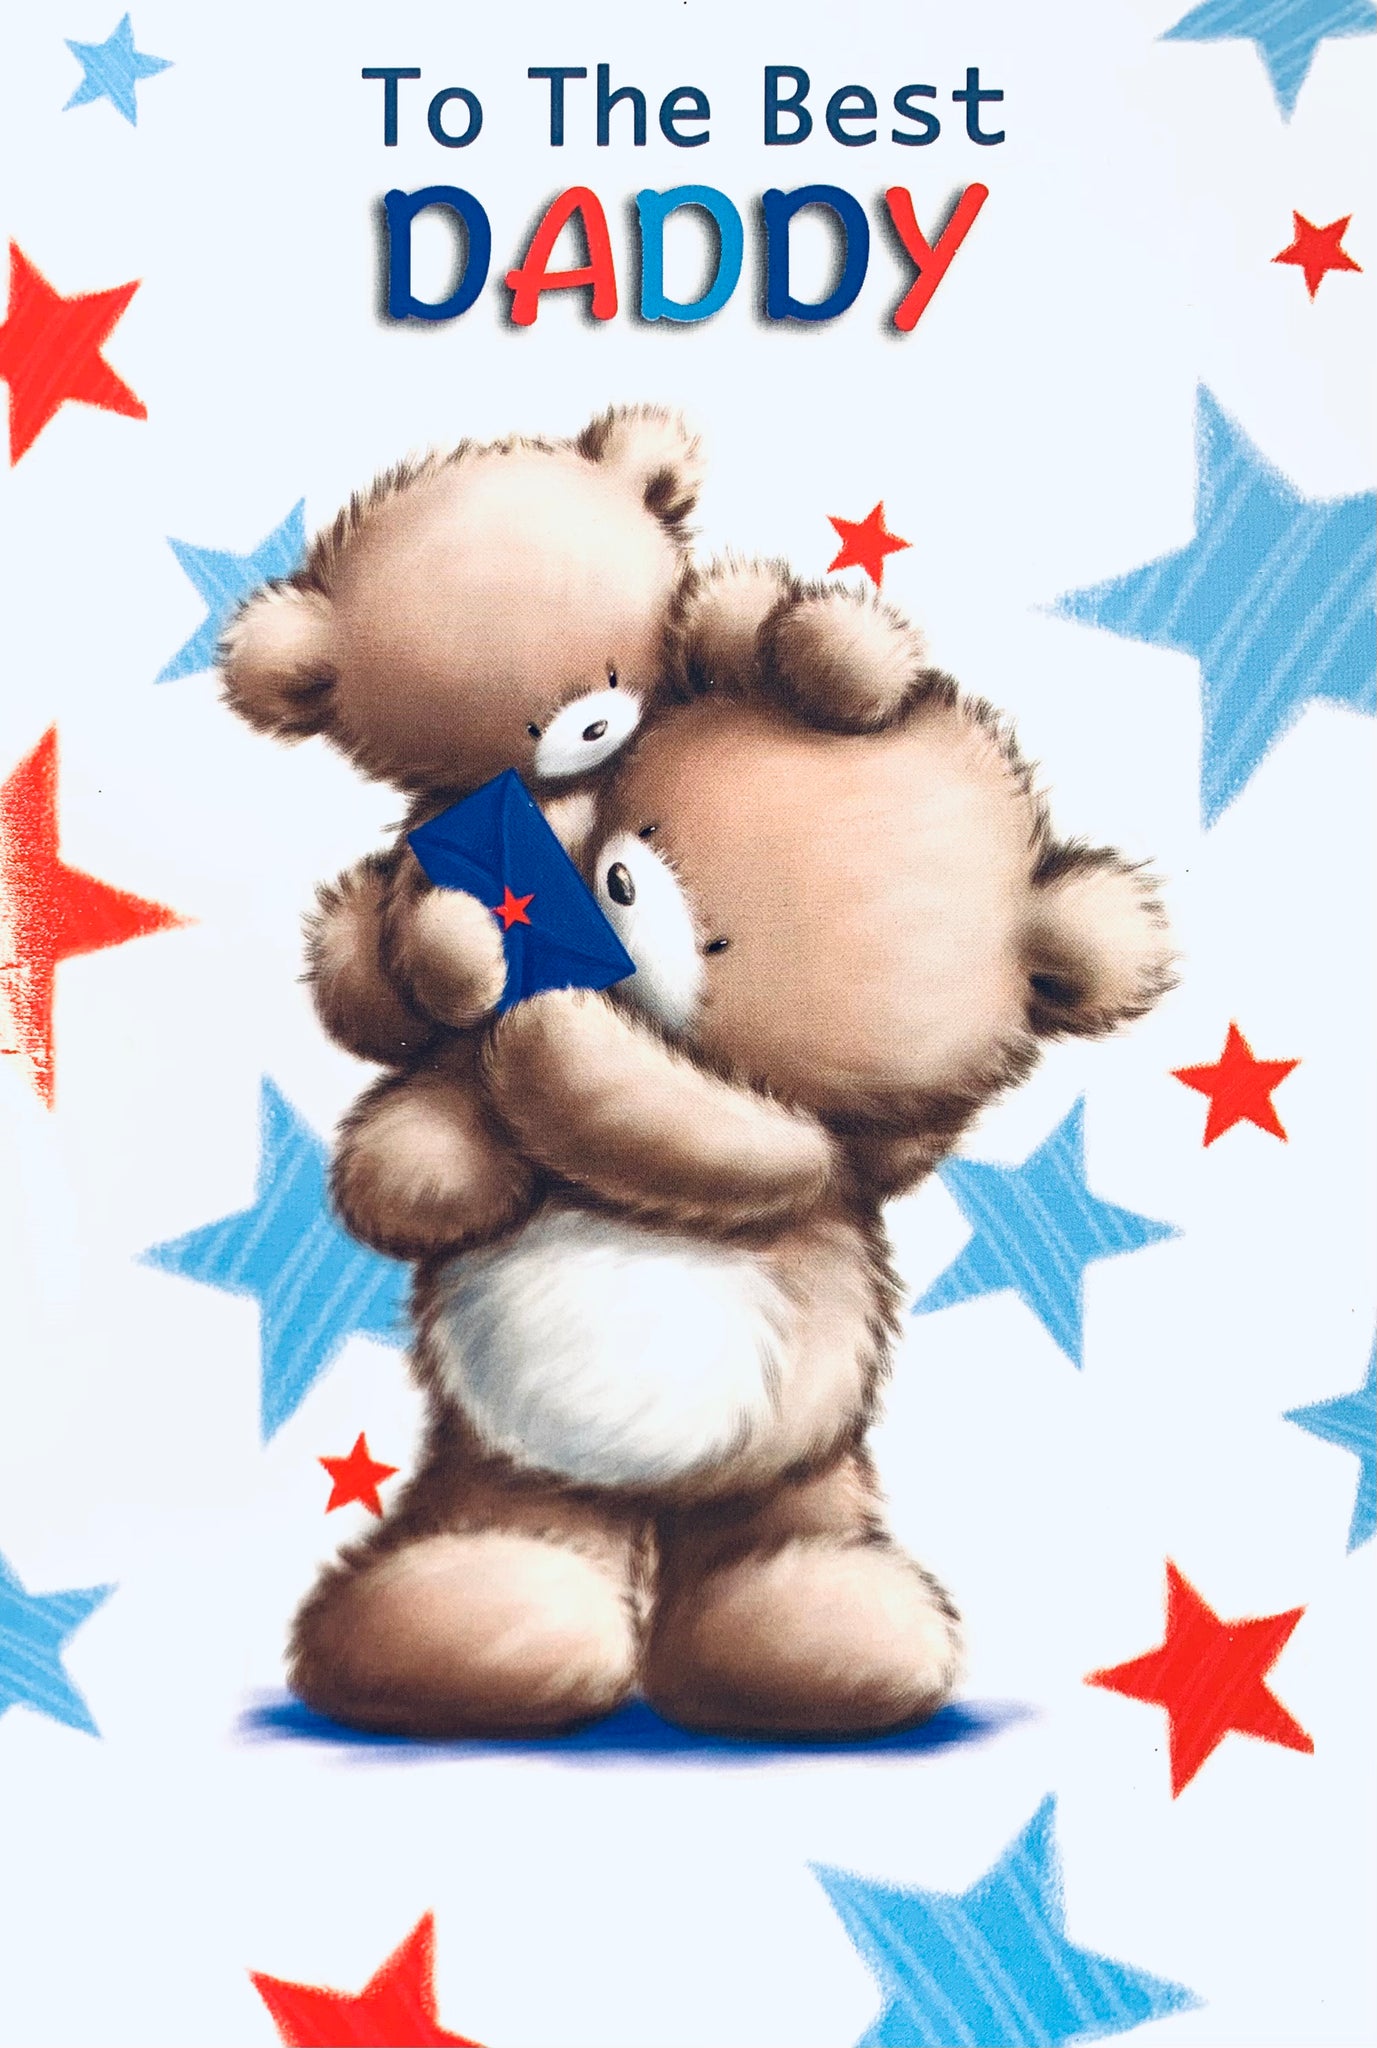 Daddy birthday card - cute bears